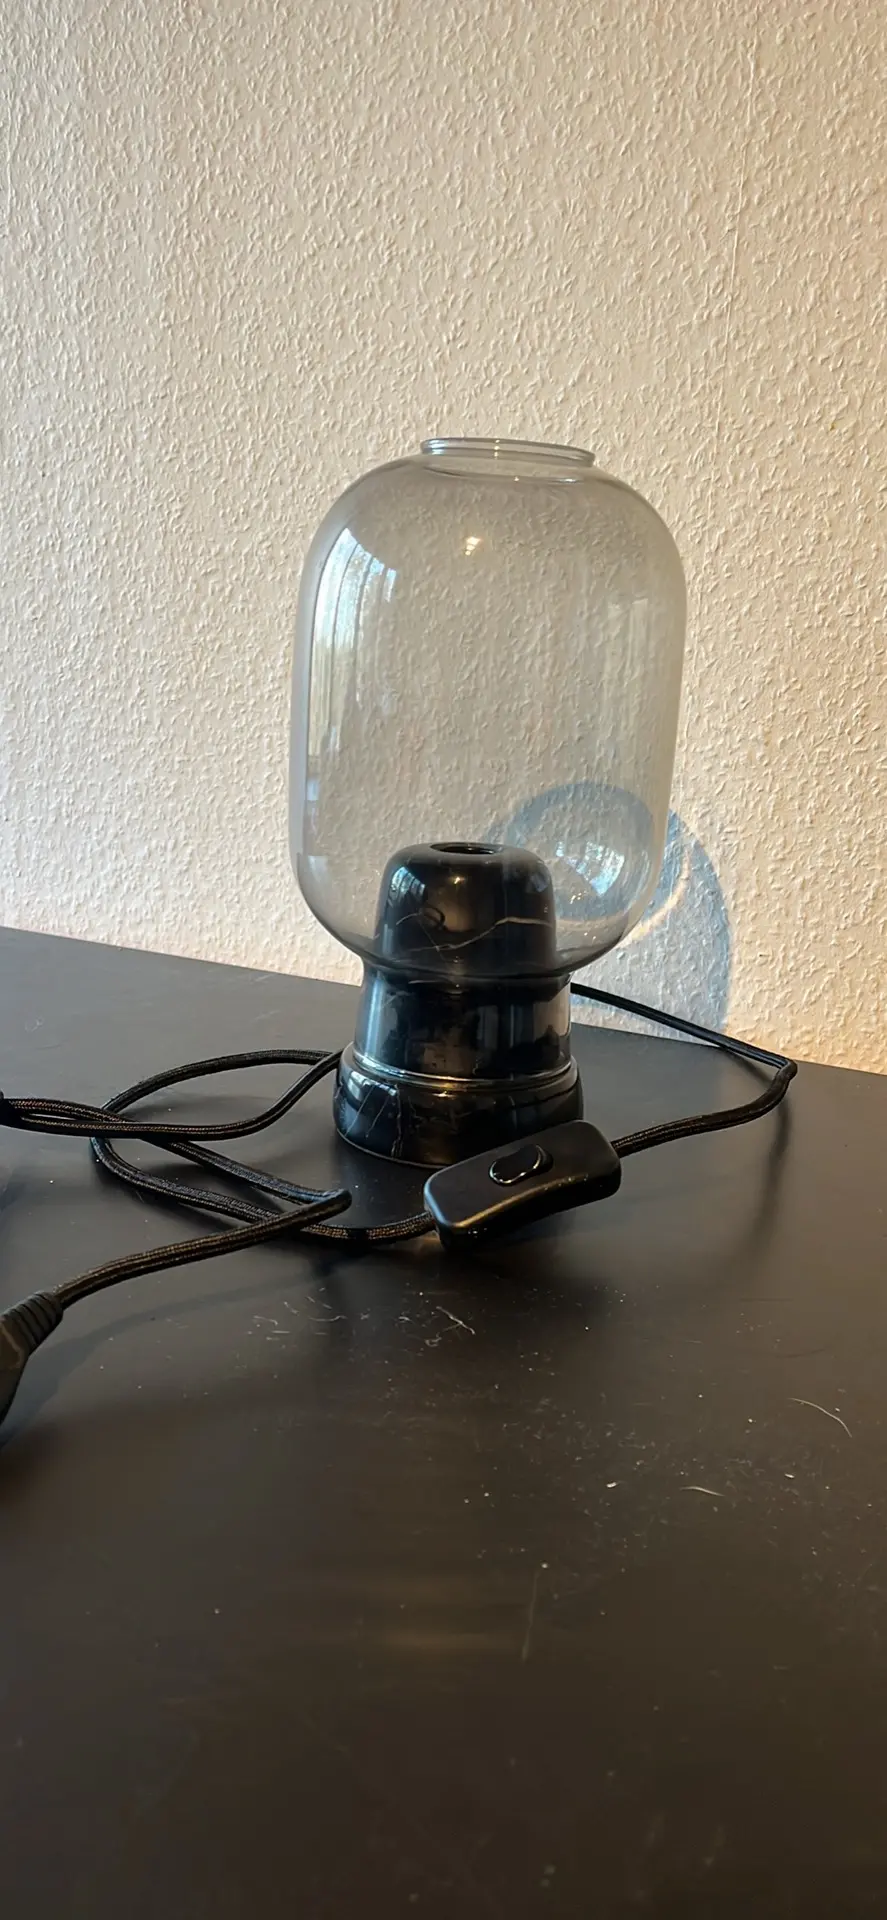 Normann Copenhagen bordlampe